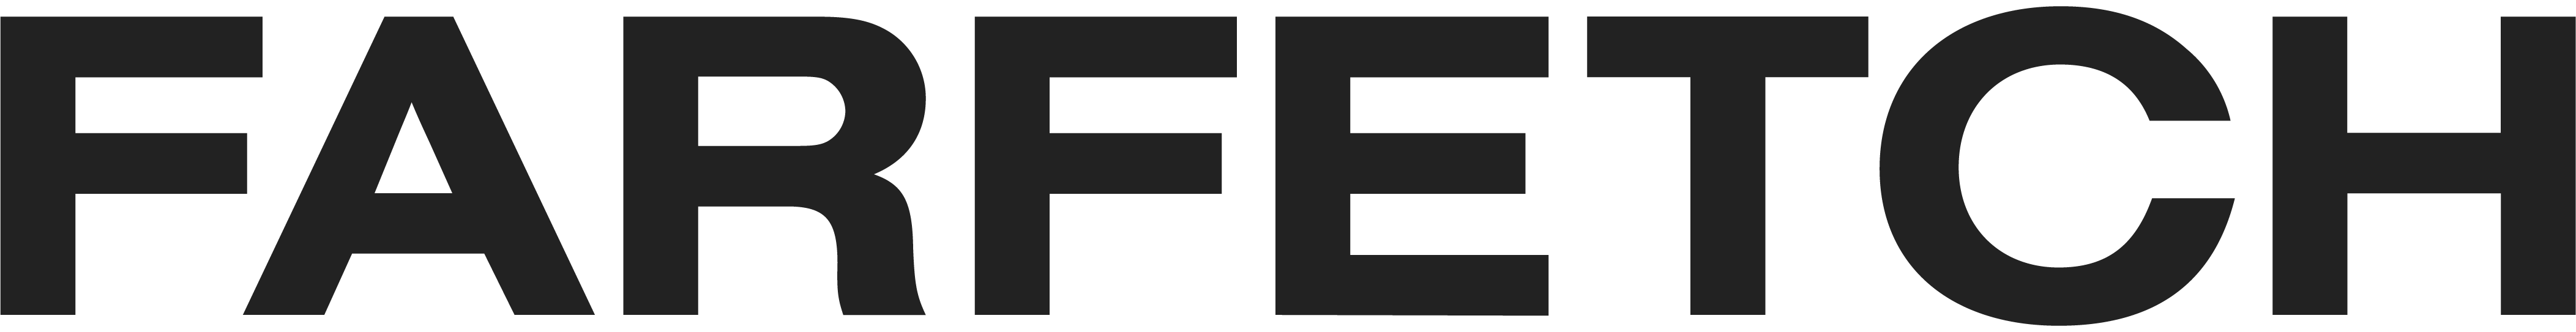 Farfetch Brand Logo